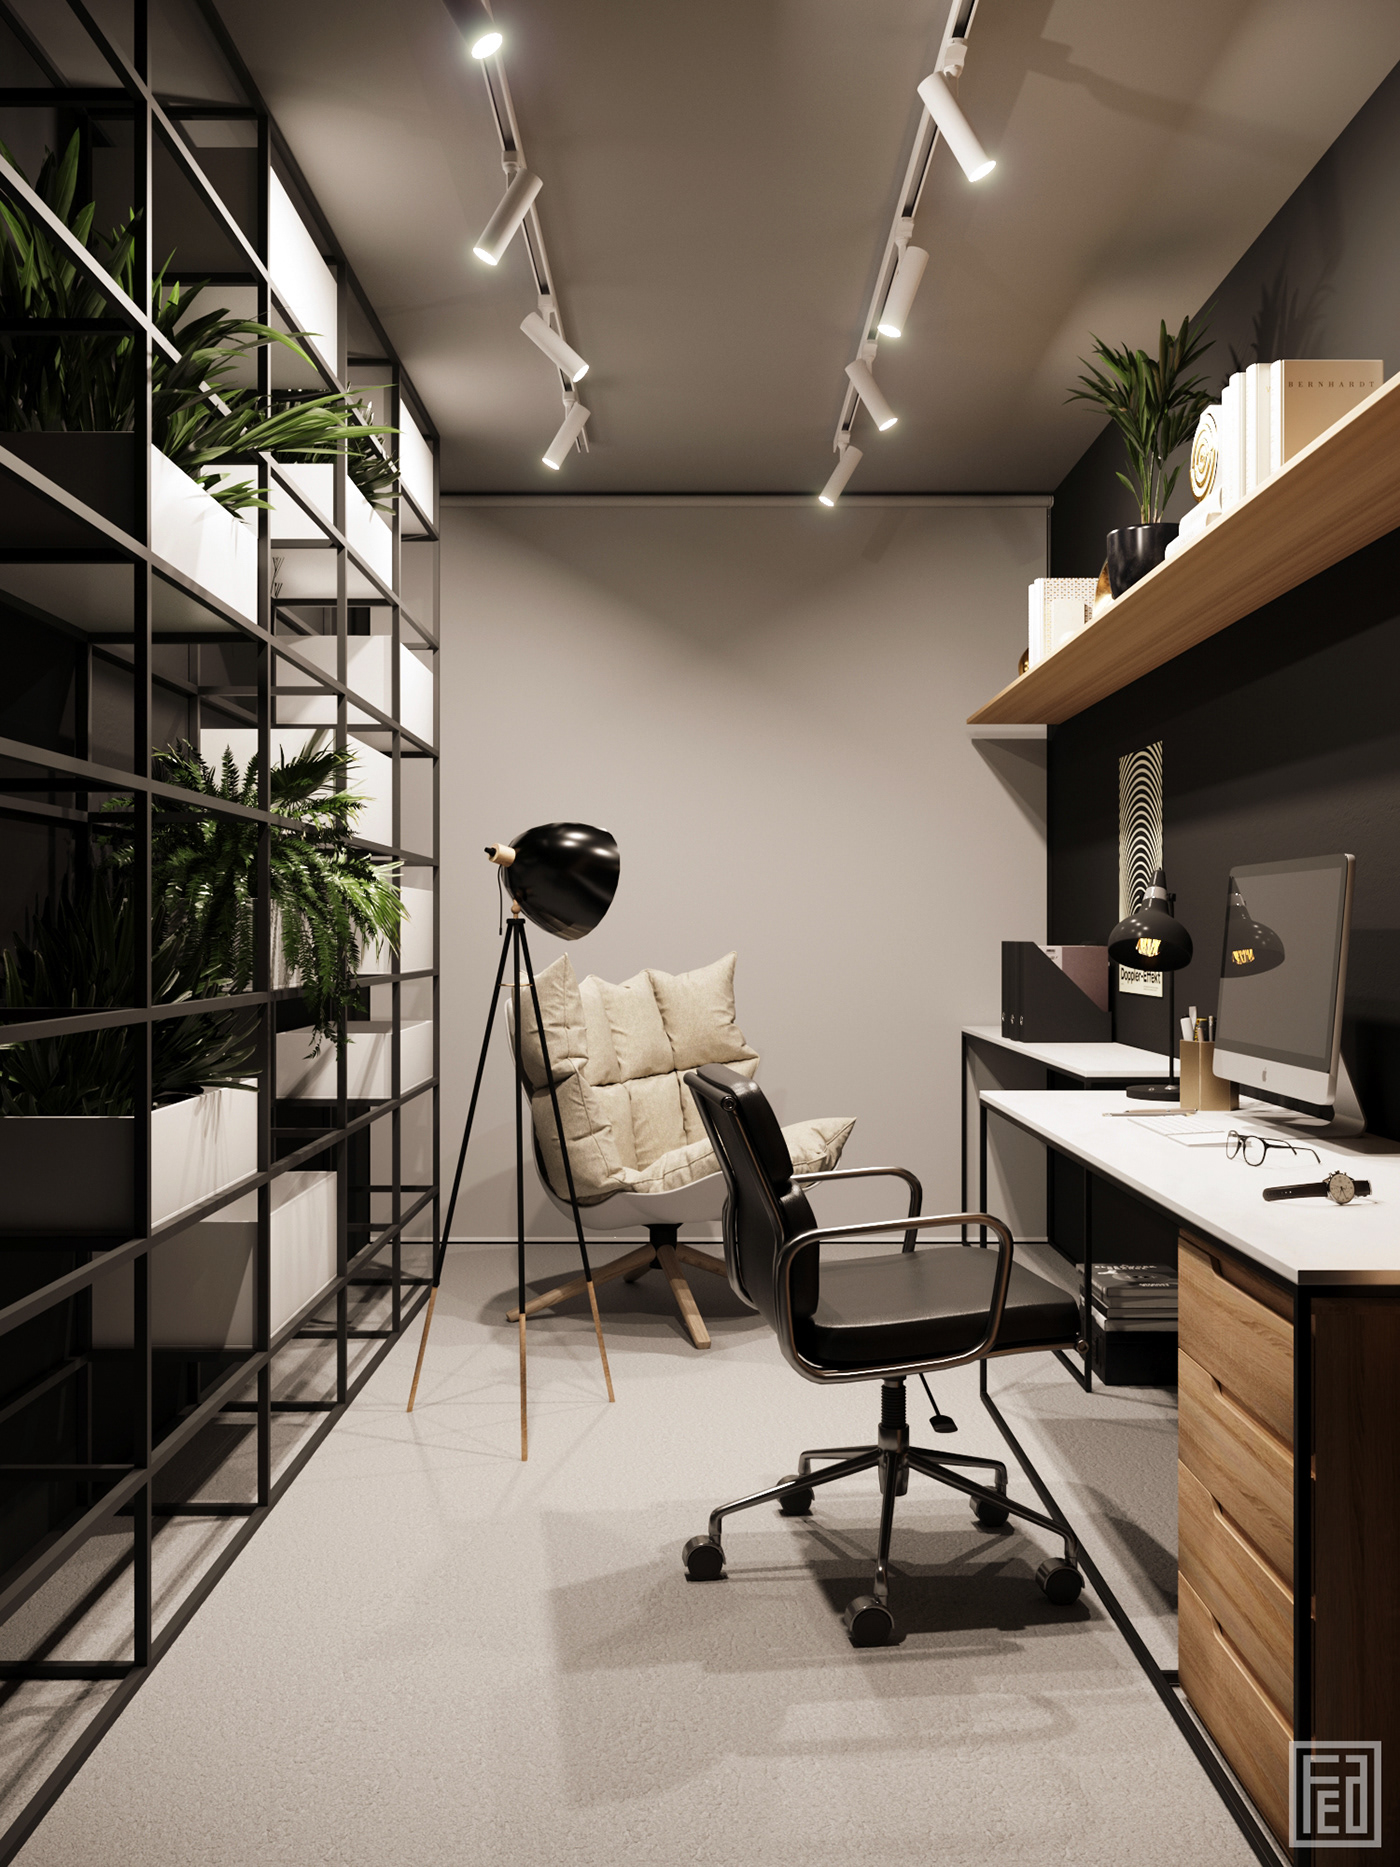 3ds max corona furniture Interior Office workplace визуализация дизайн интерьер офис